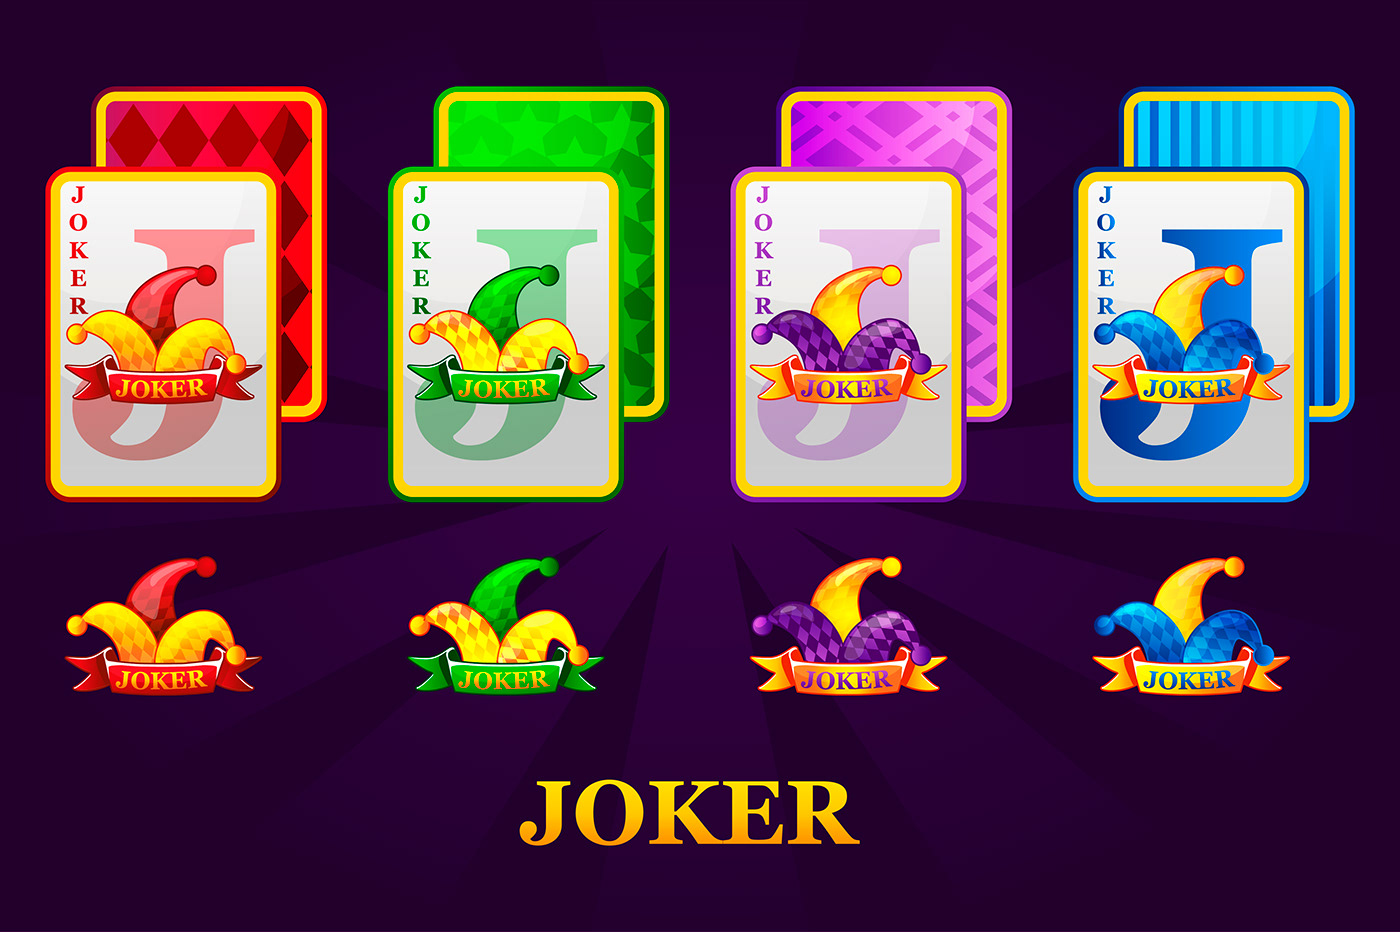 Poker casino Playing Cards suit joker KIND jack queen clubs diamonds